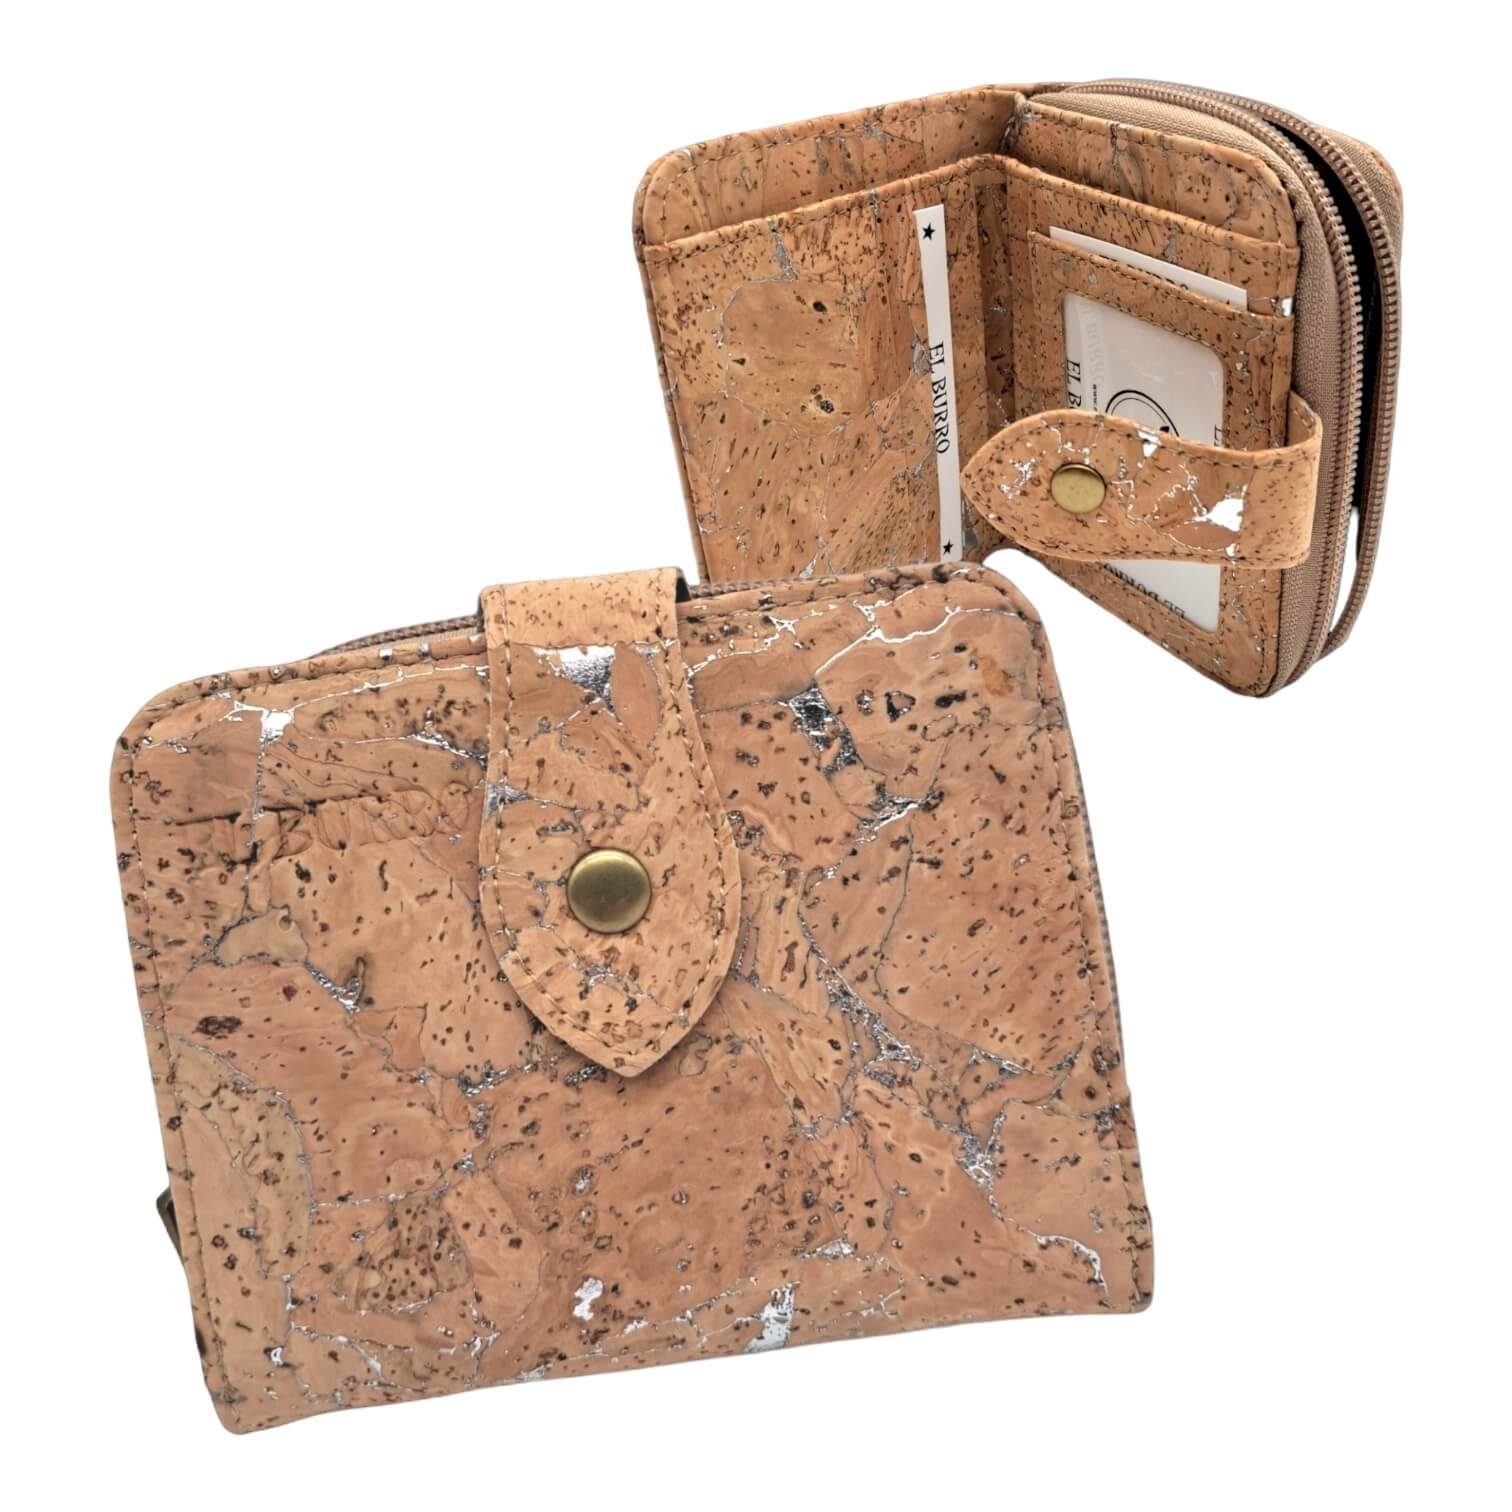 EL BURRO Geldbörse Damen Reißverschluss Geldbeutel aus Kork, 12x10 cm, Lederfrei, vegan natur-silber